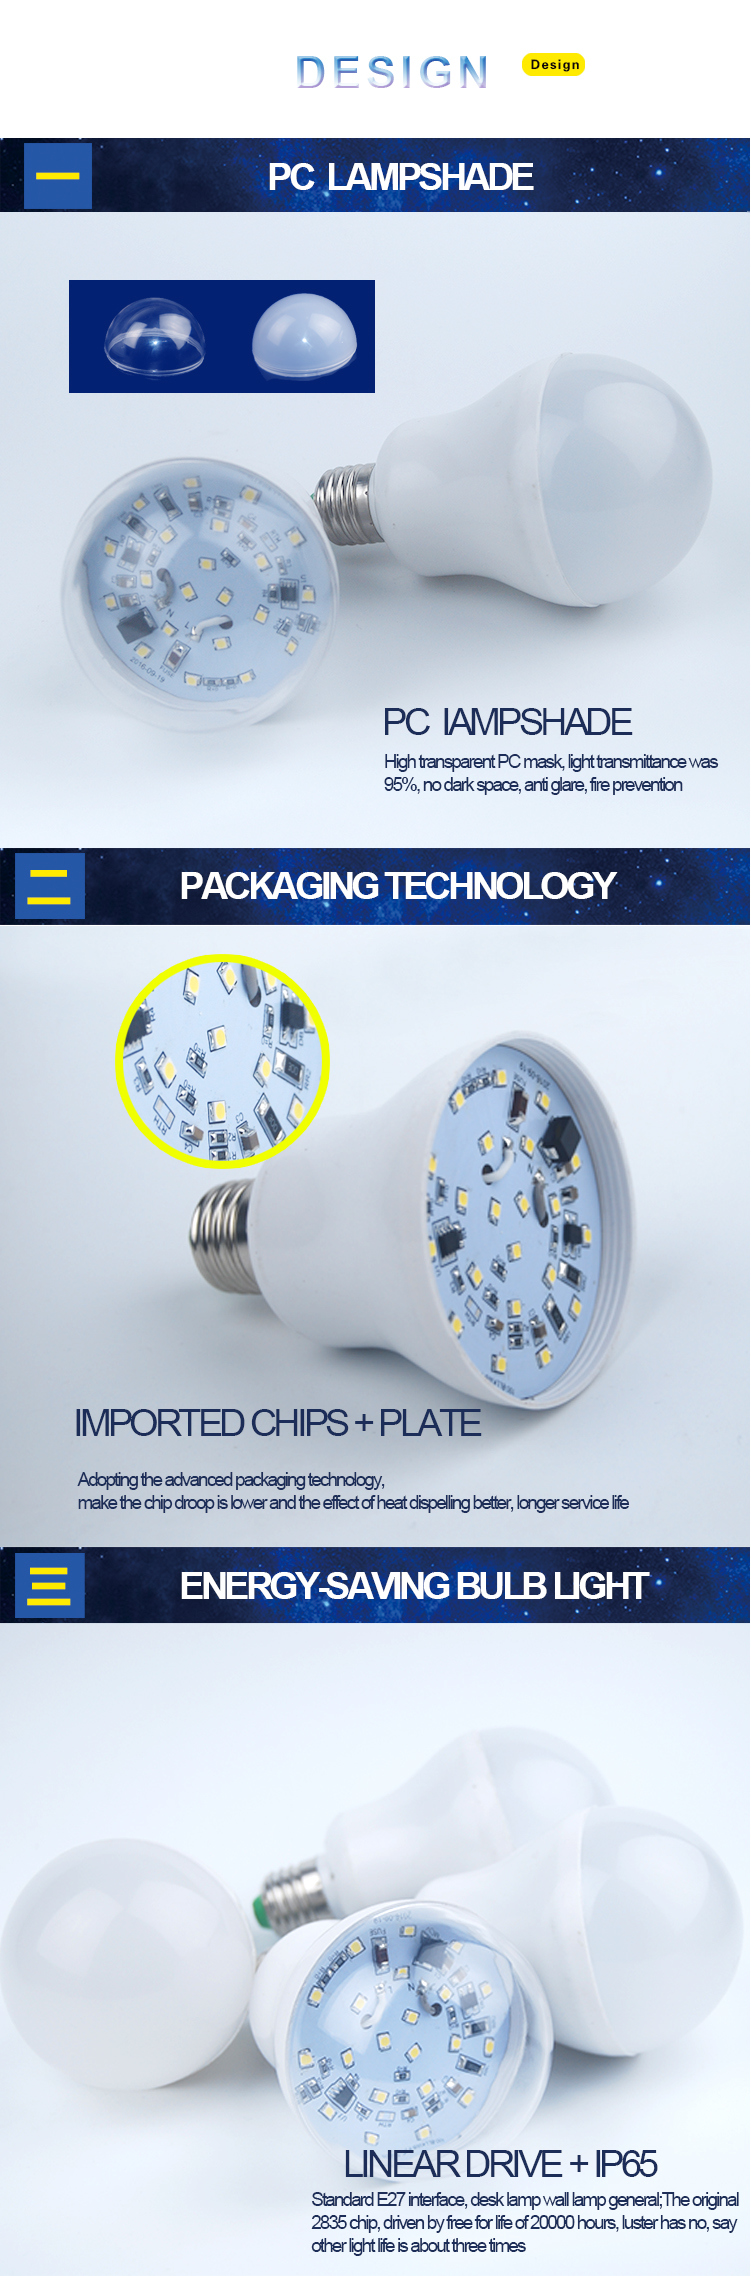 High Quality and High Lumen Linear Drives 8W LED Bulbs